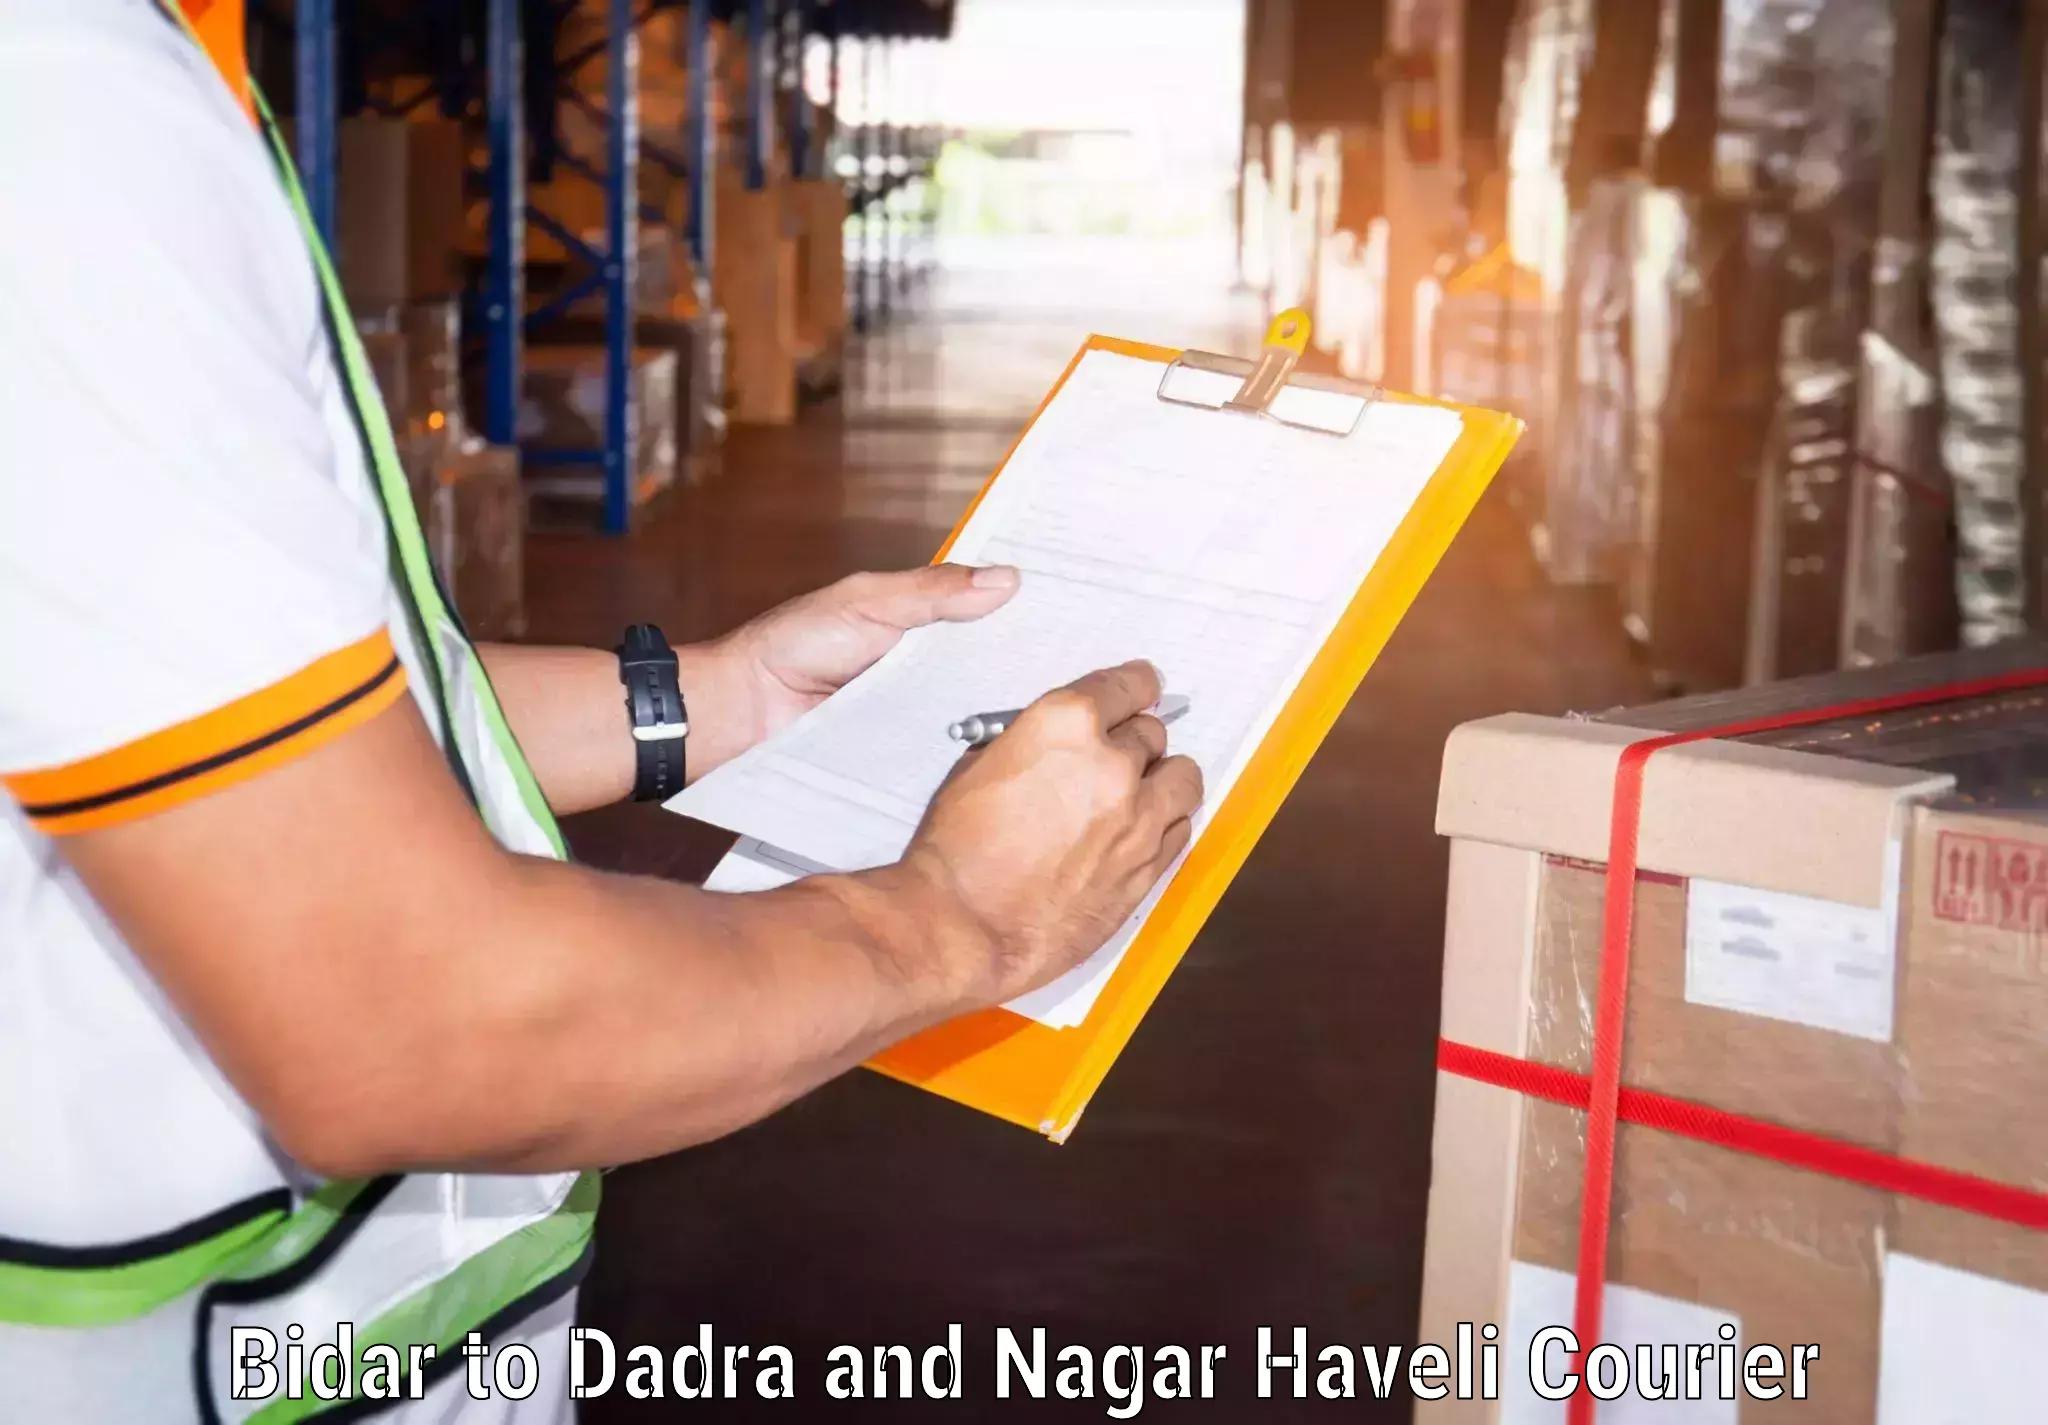 Package delivery network Bidar to Silvassa